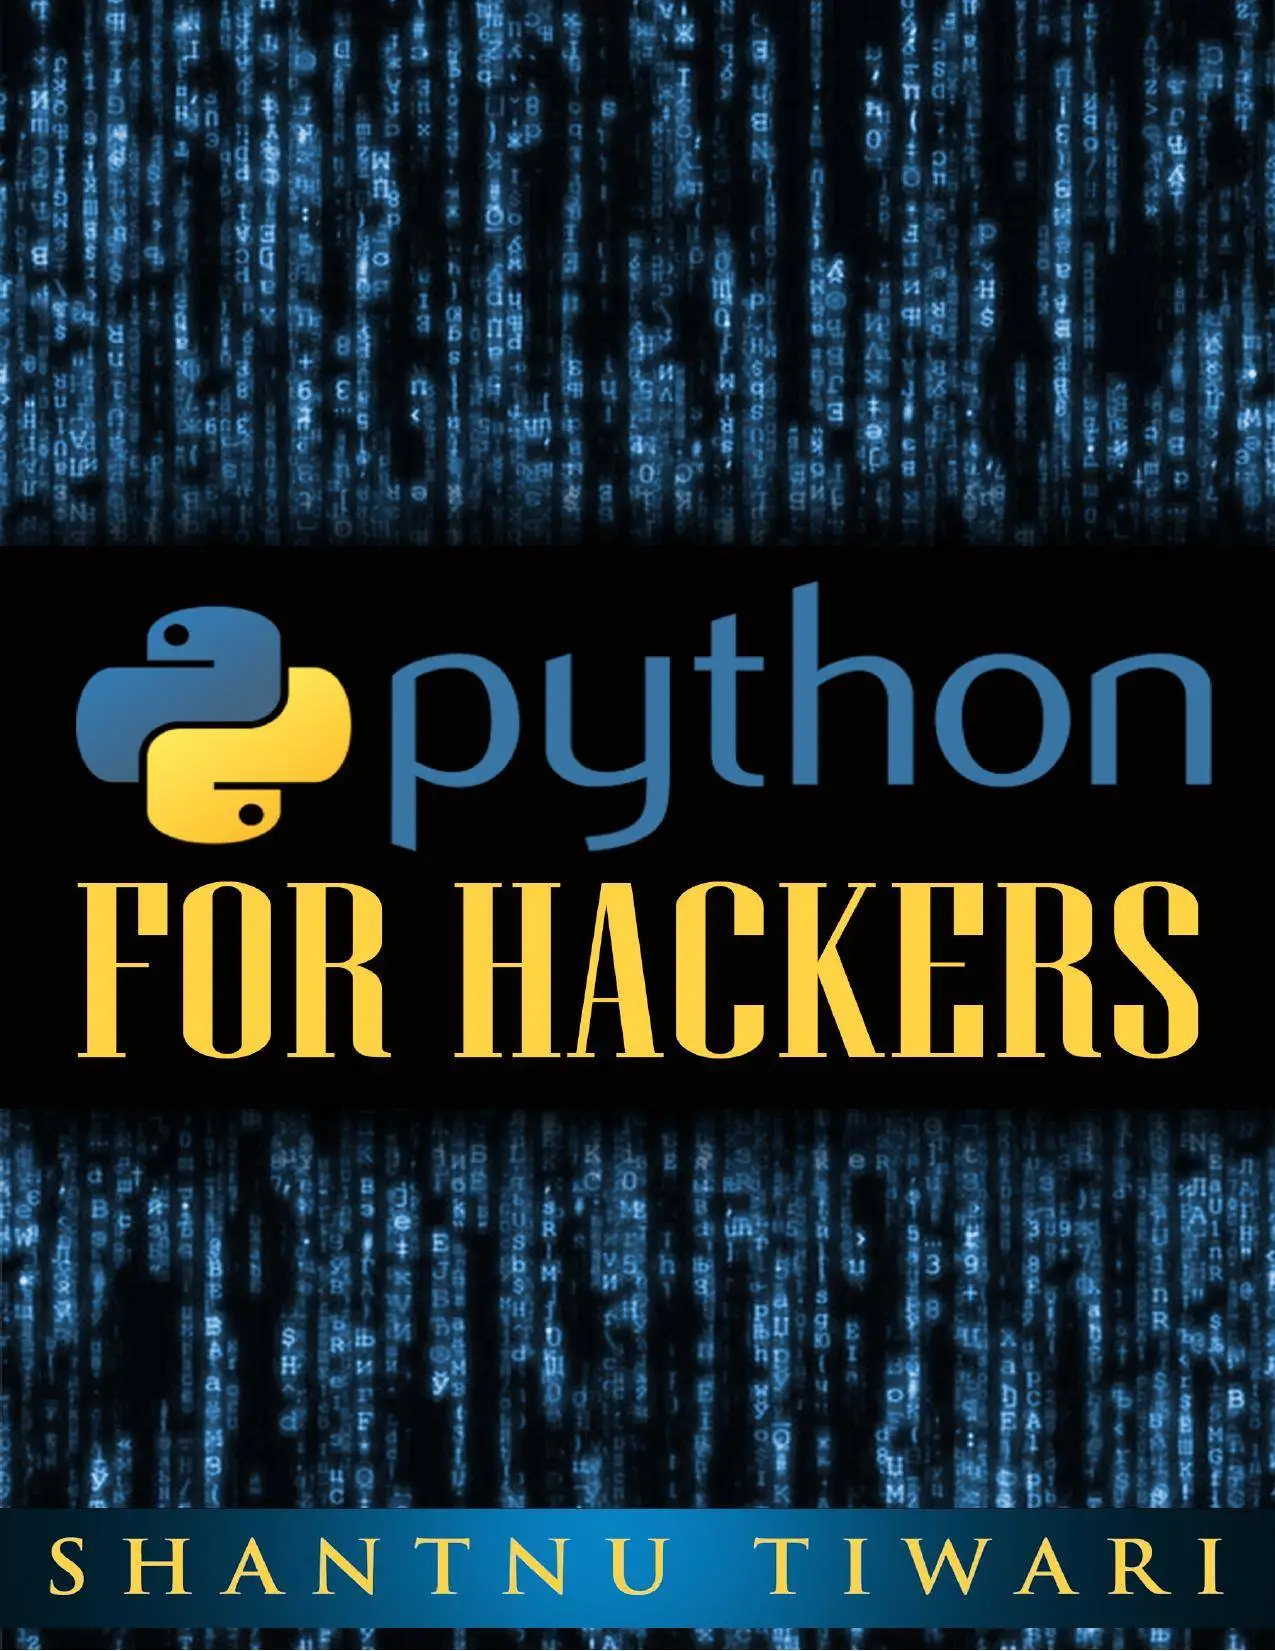 Hat python. Python хакер. Black hat Python: Python Programming for Hackers and Pentesters. Питон для хакеров книга. Python хакер журнал.